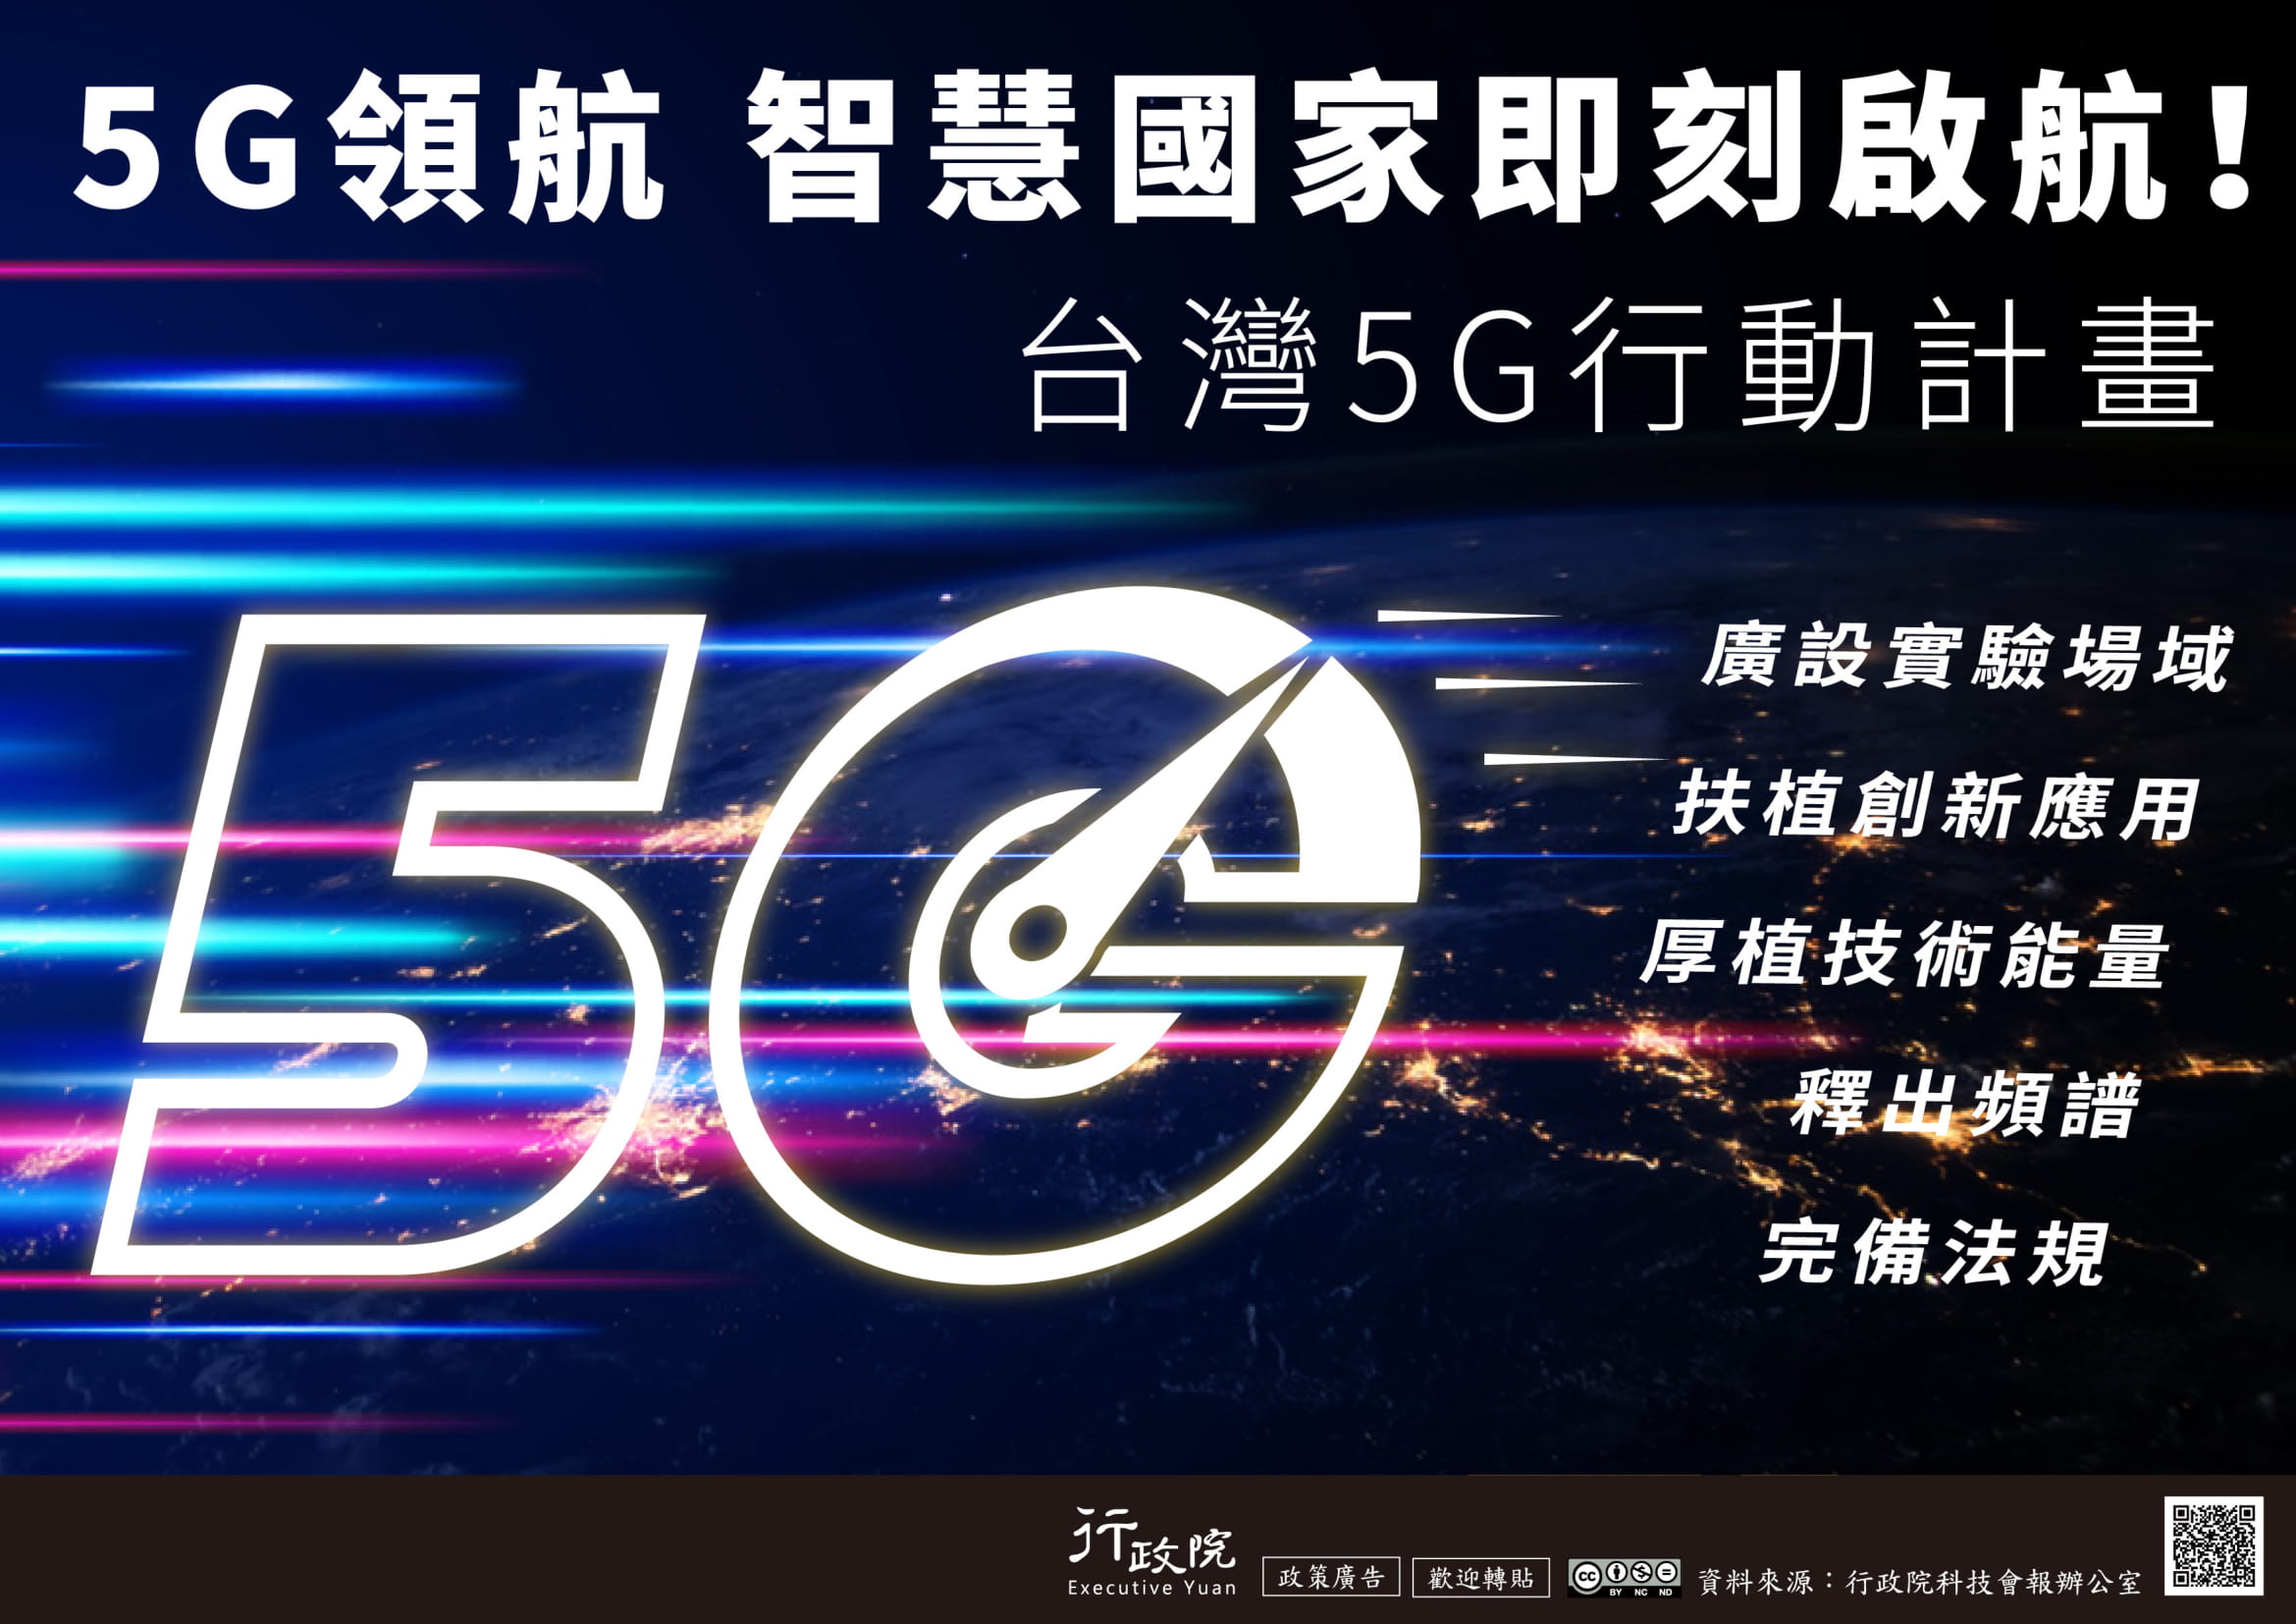 5G領航 智慧國家即刻啟航！台灣5G行動計畫：廣設實驗場域、扶植創新應用、厚植技術能量、釋出頻譜、完備法規